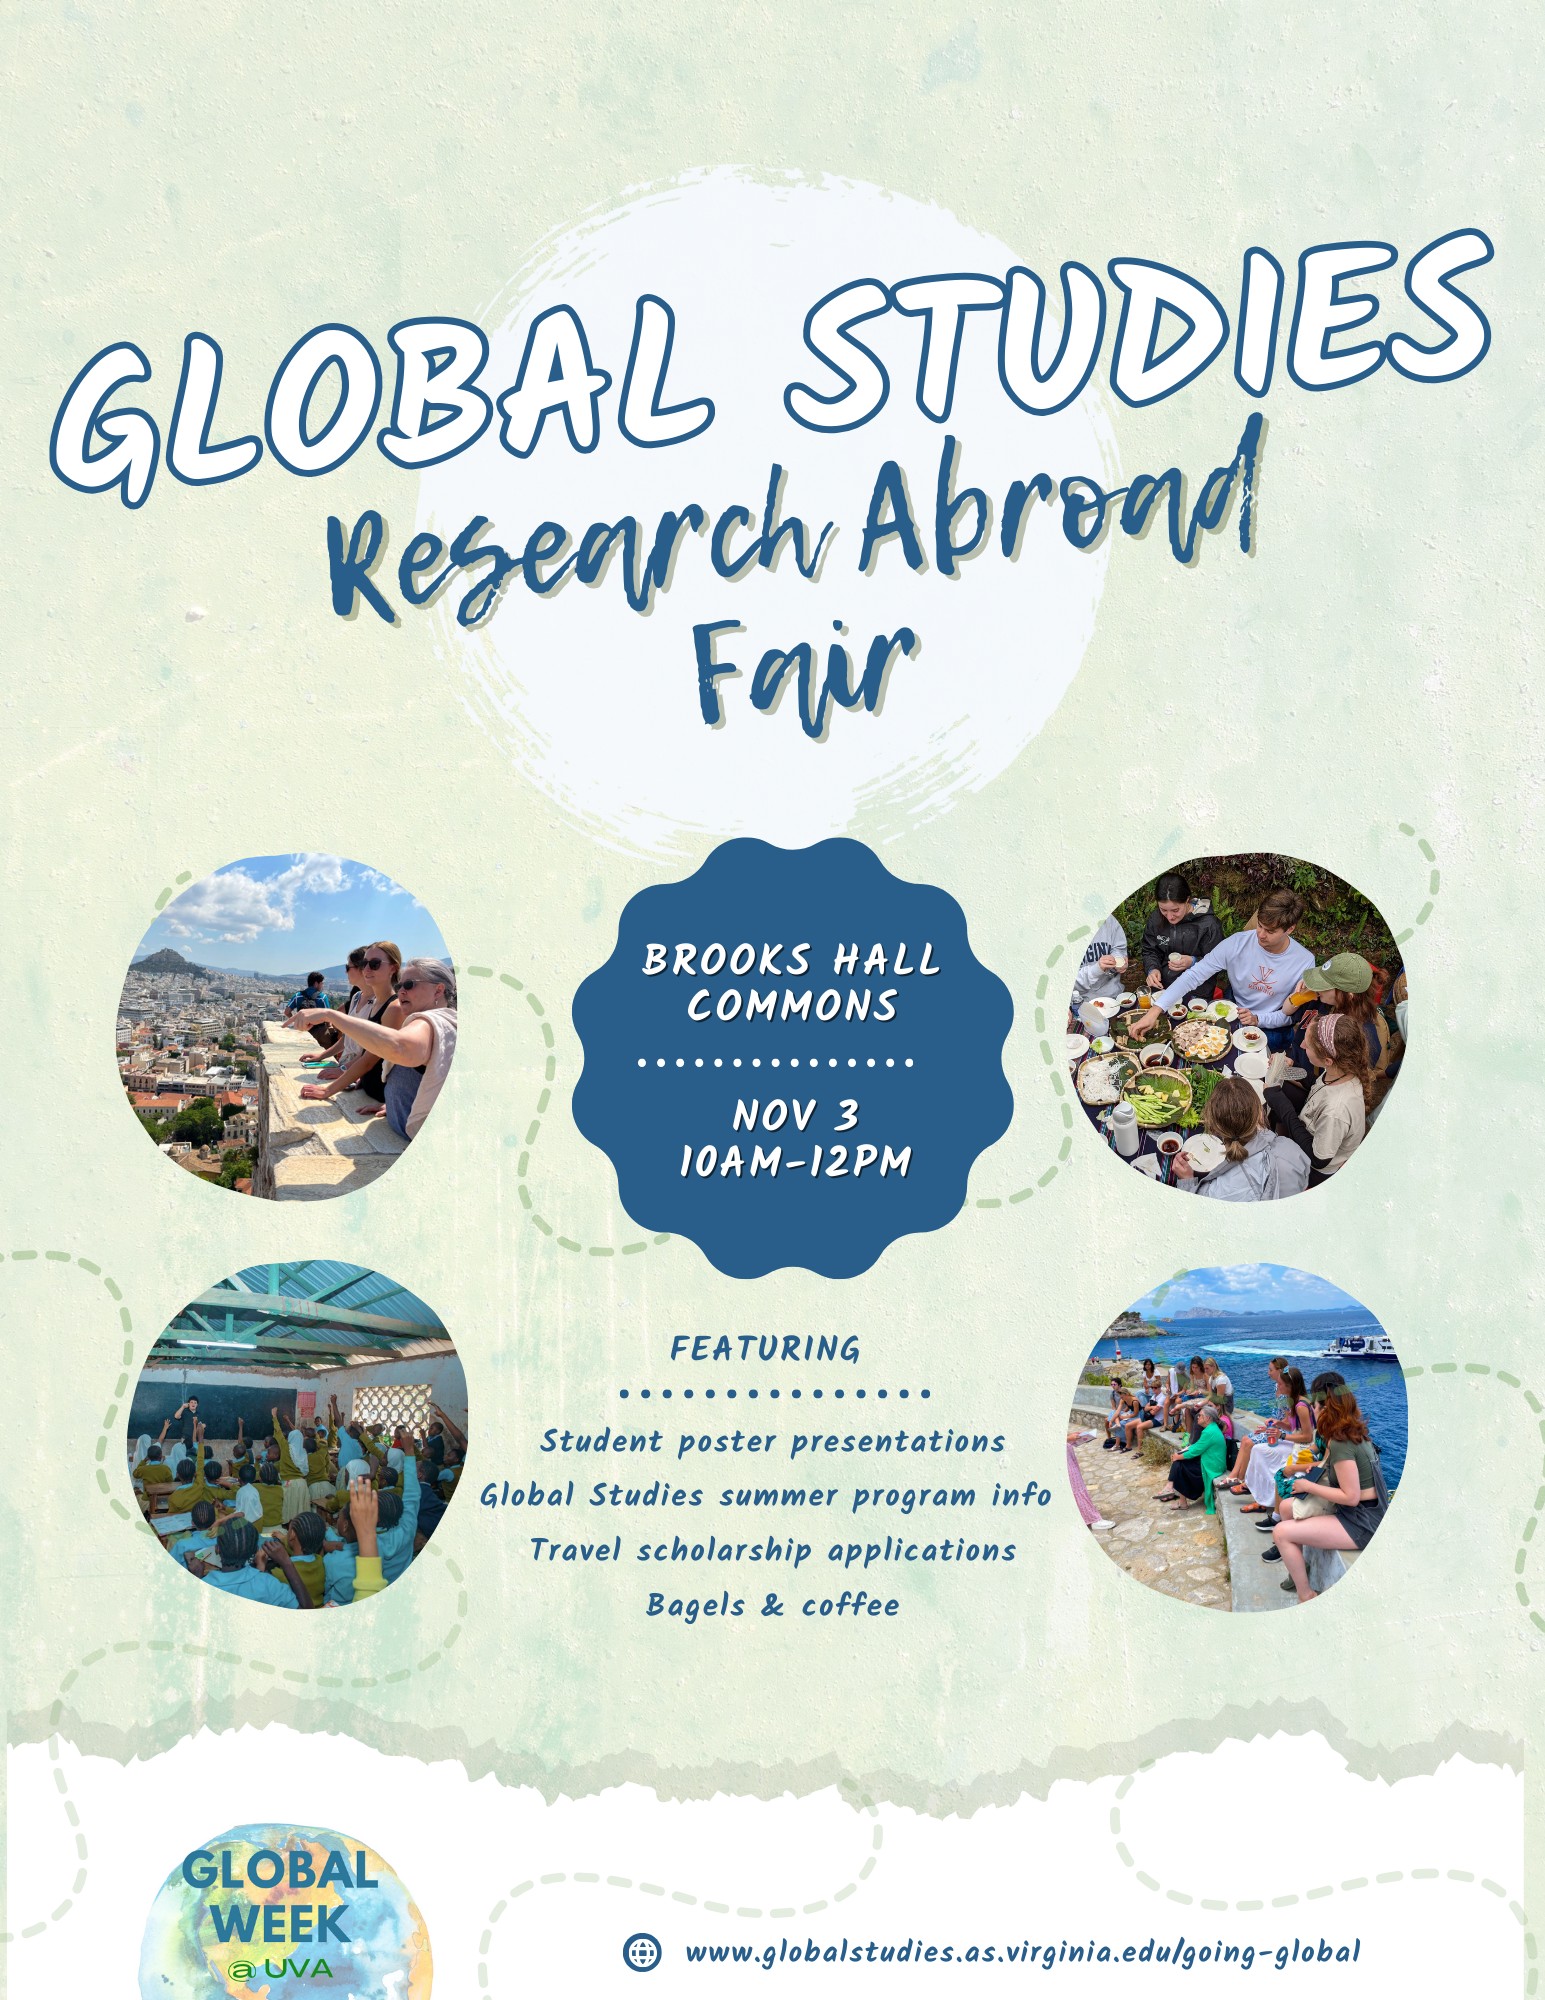 Global Studies Research Abroad Fair